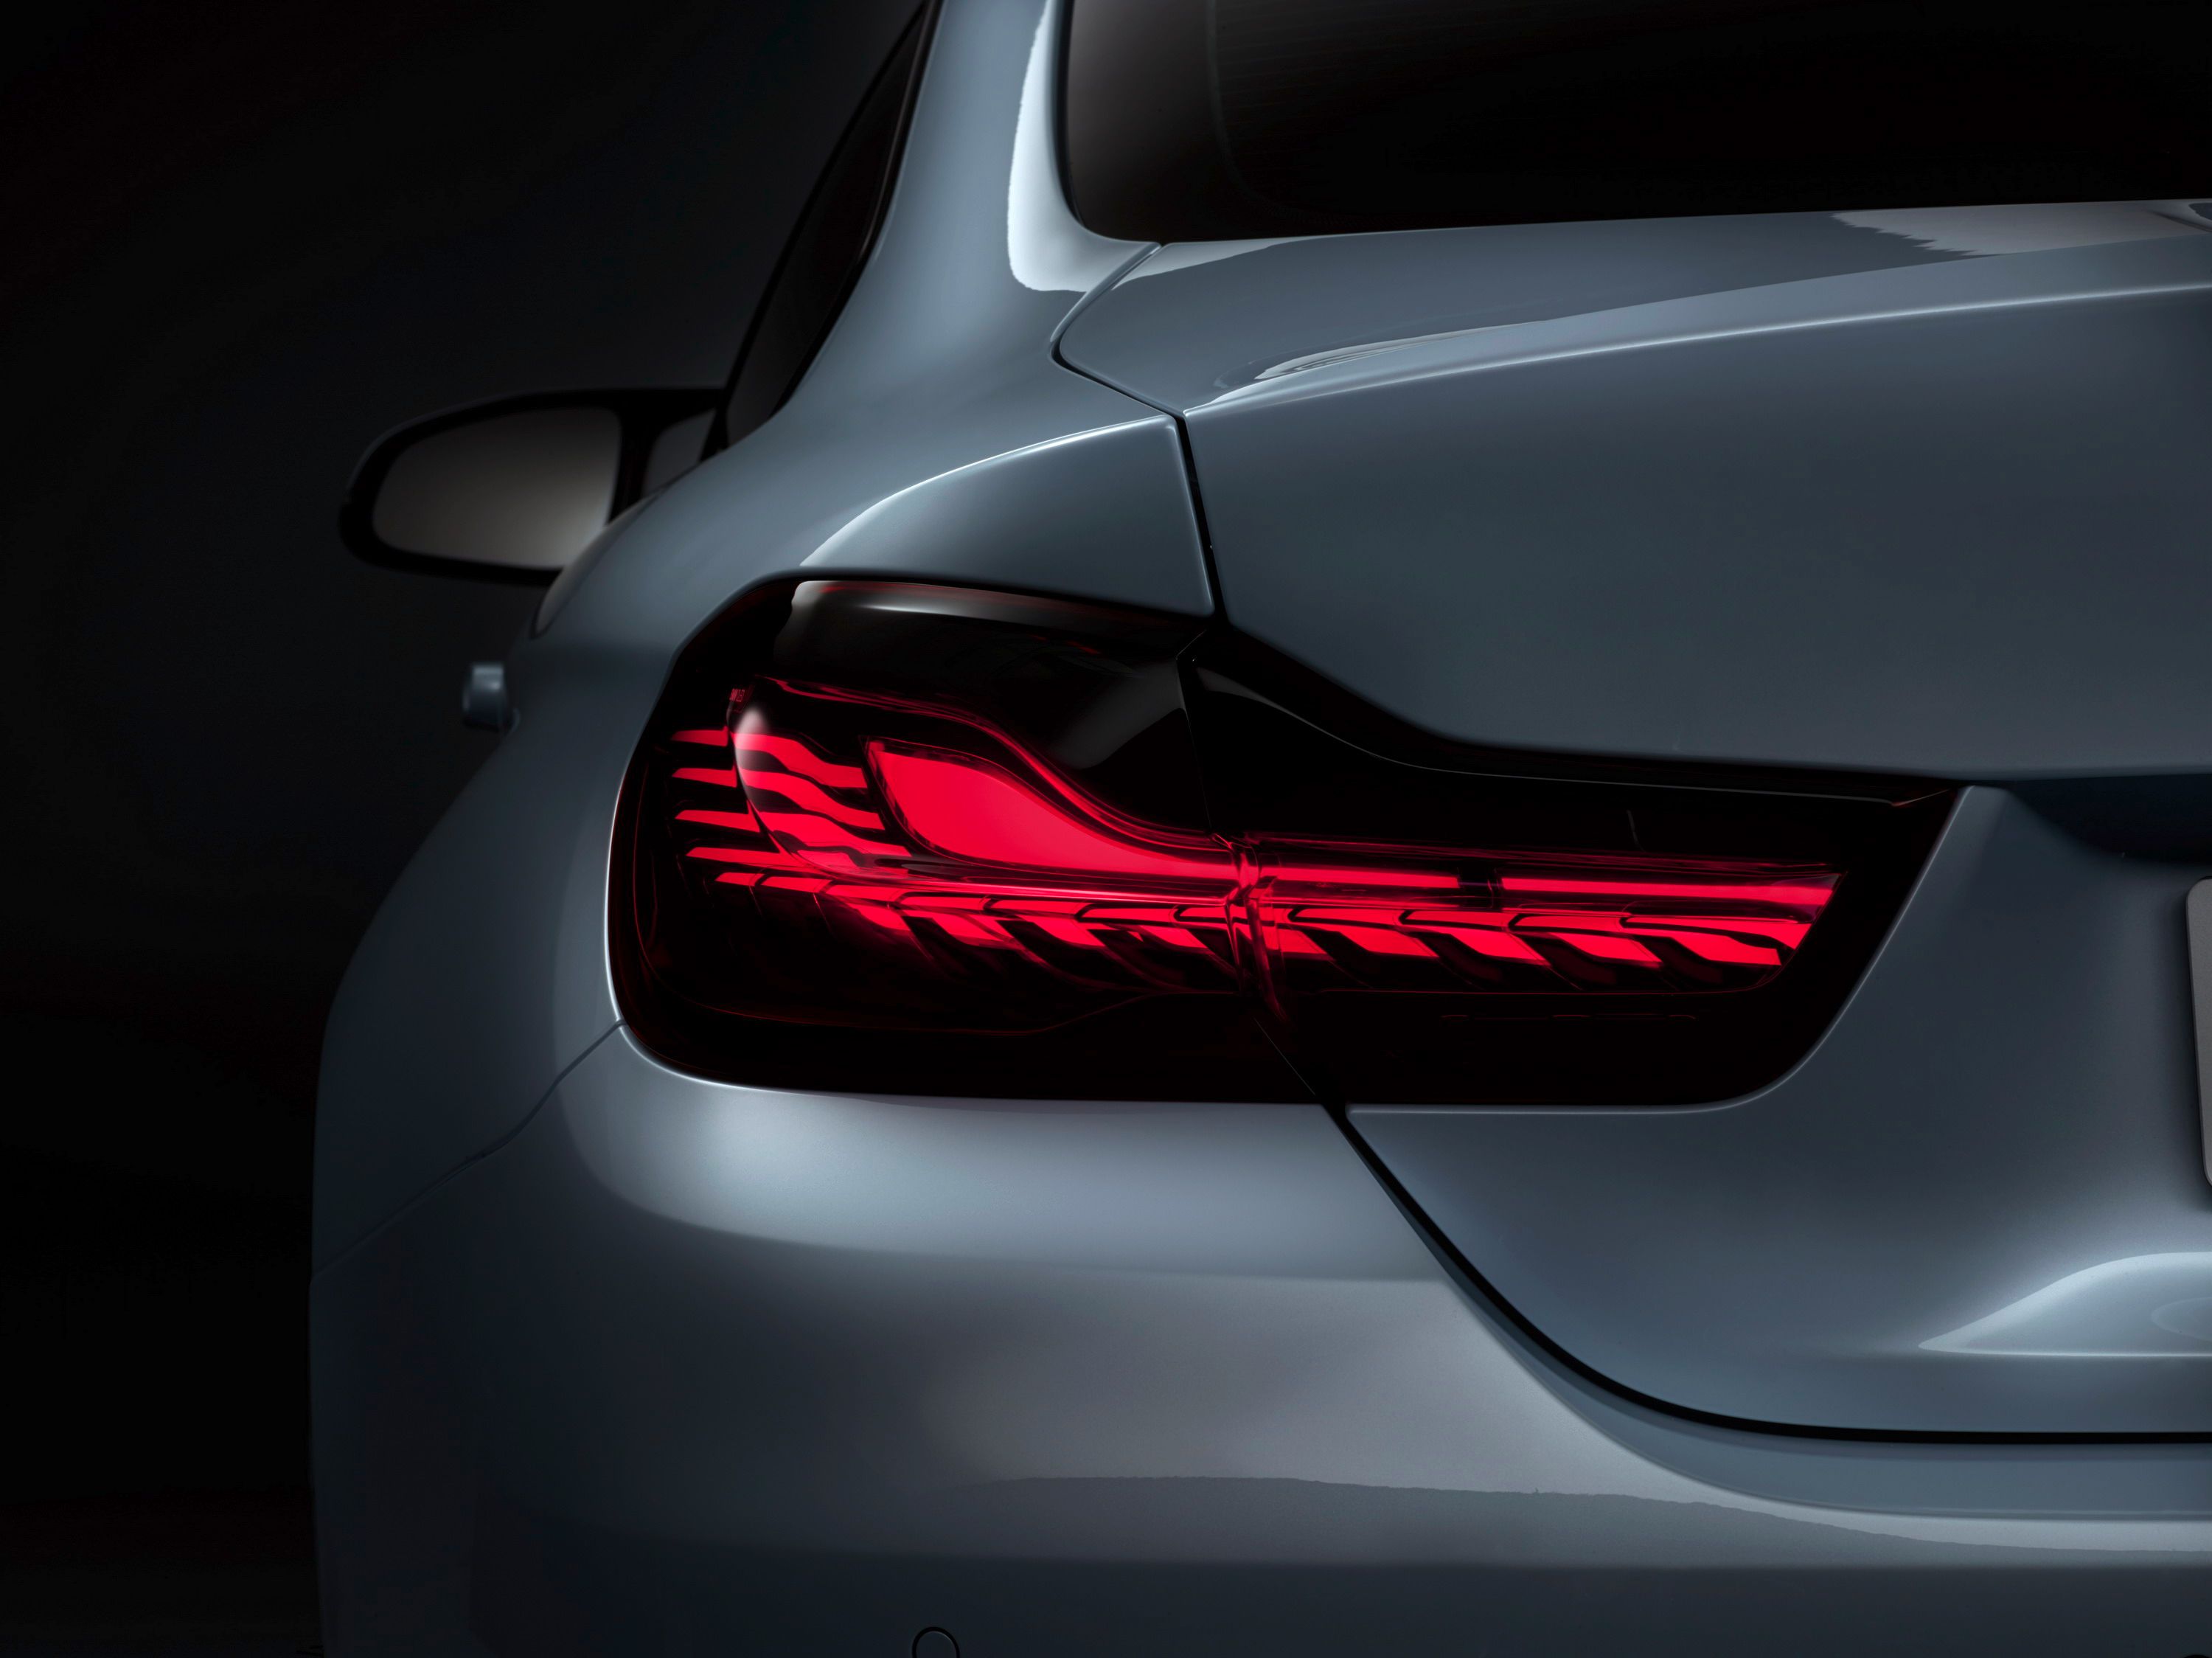 2015 BMW M4 Concept Iconic Lights